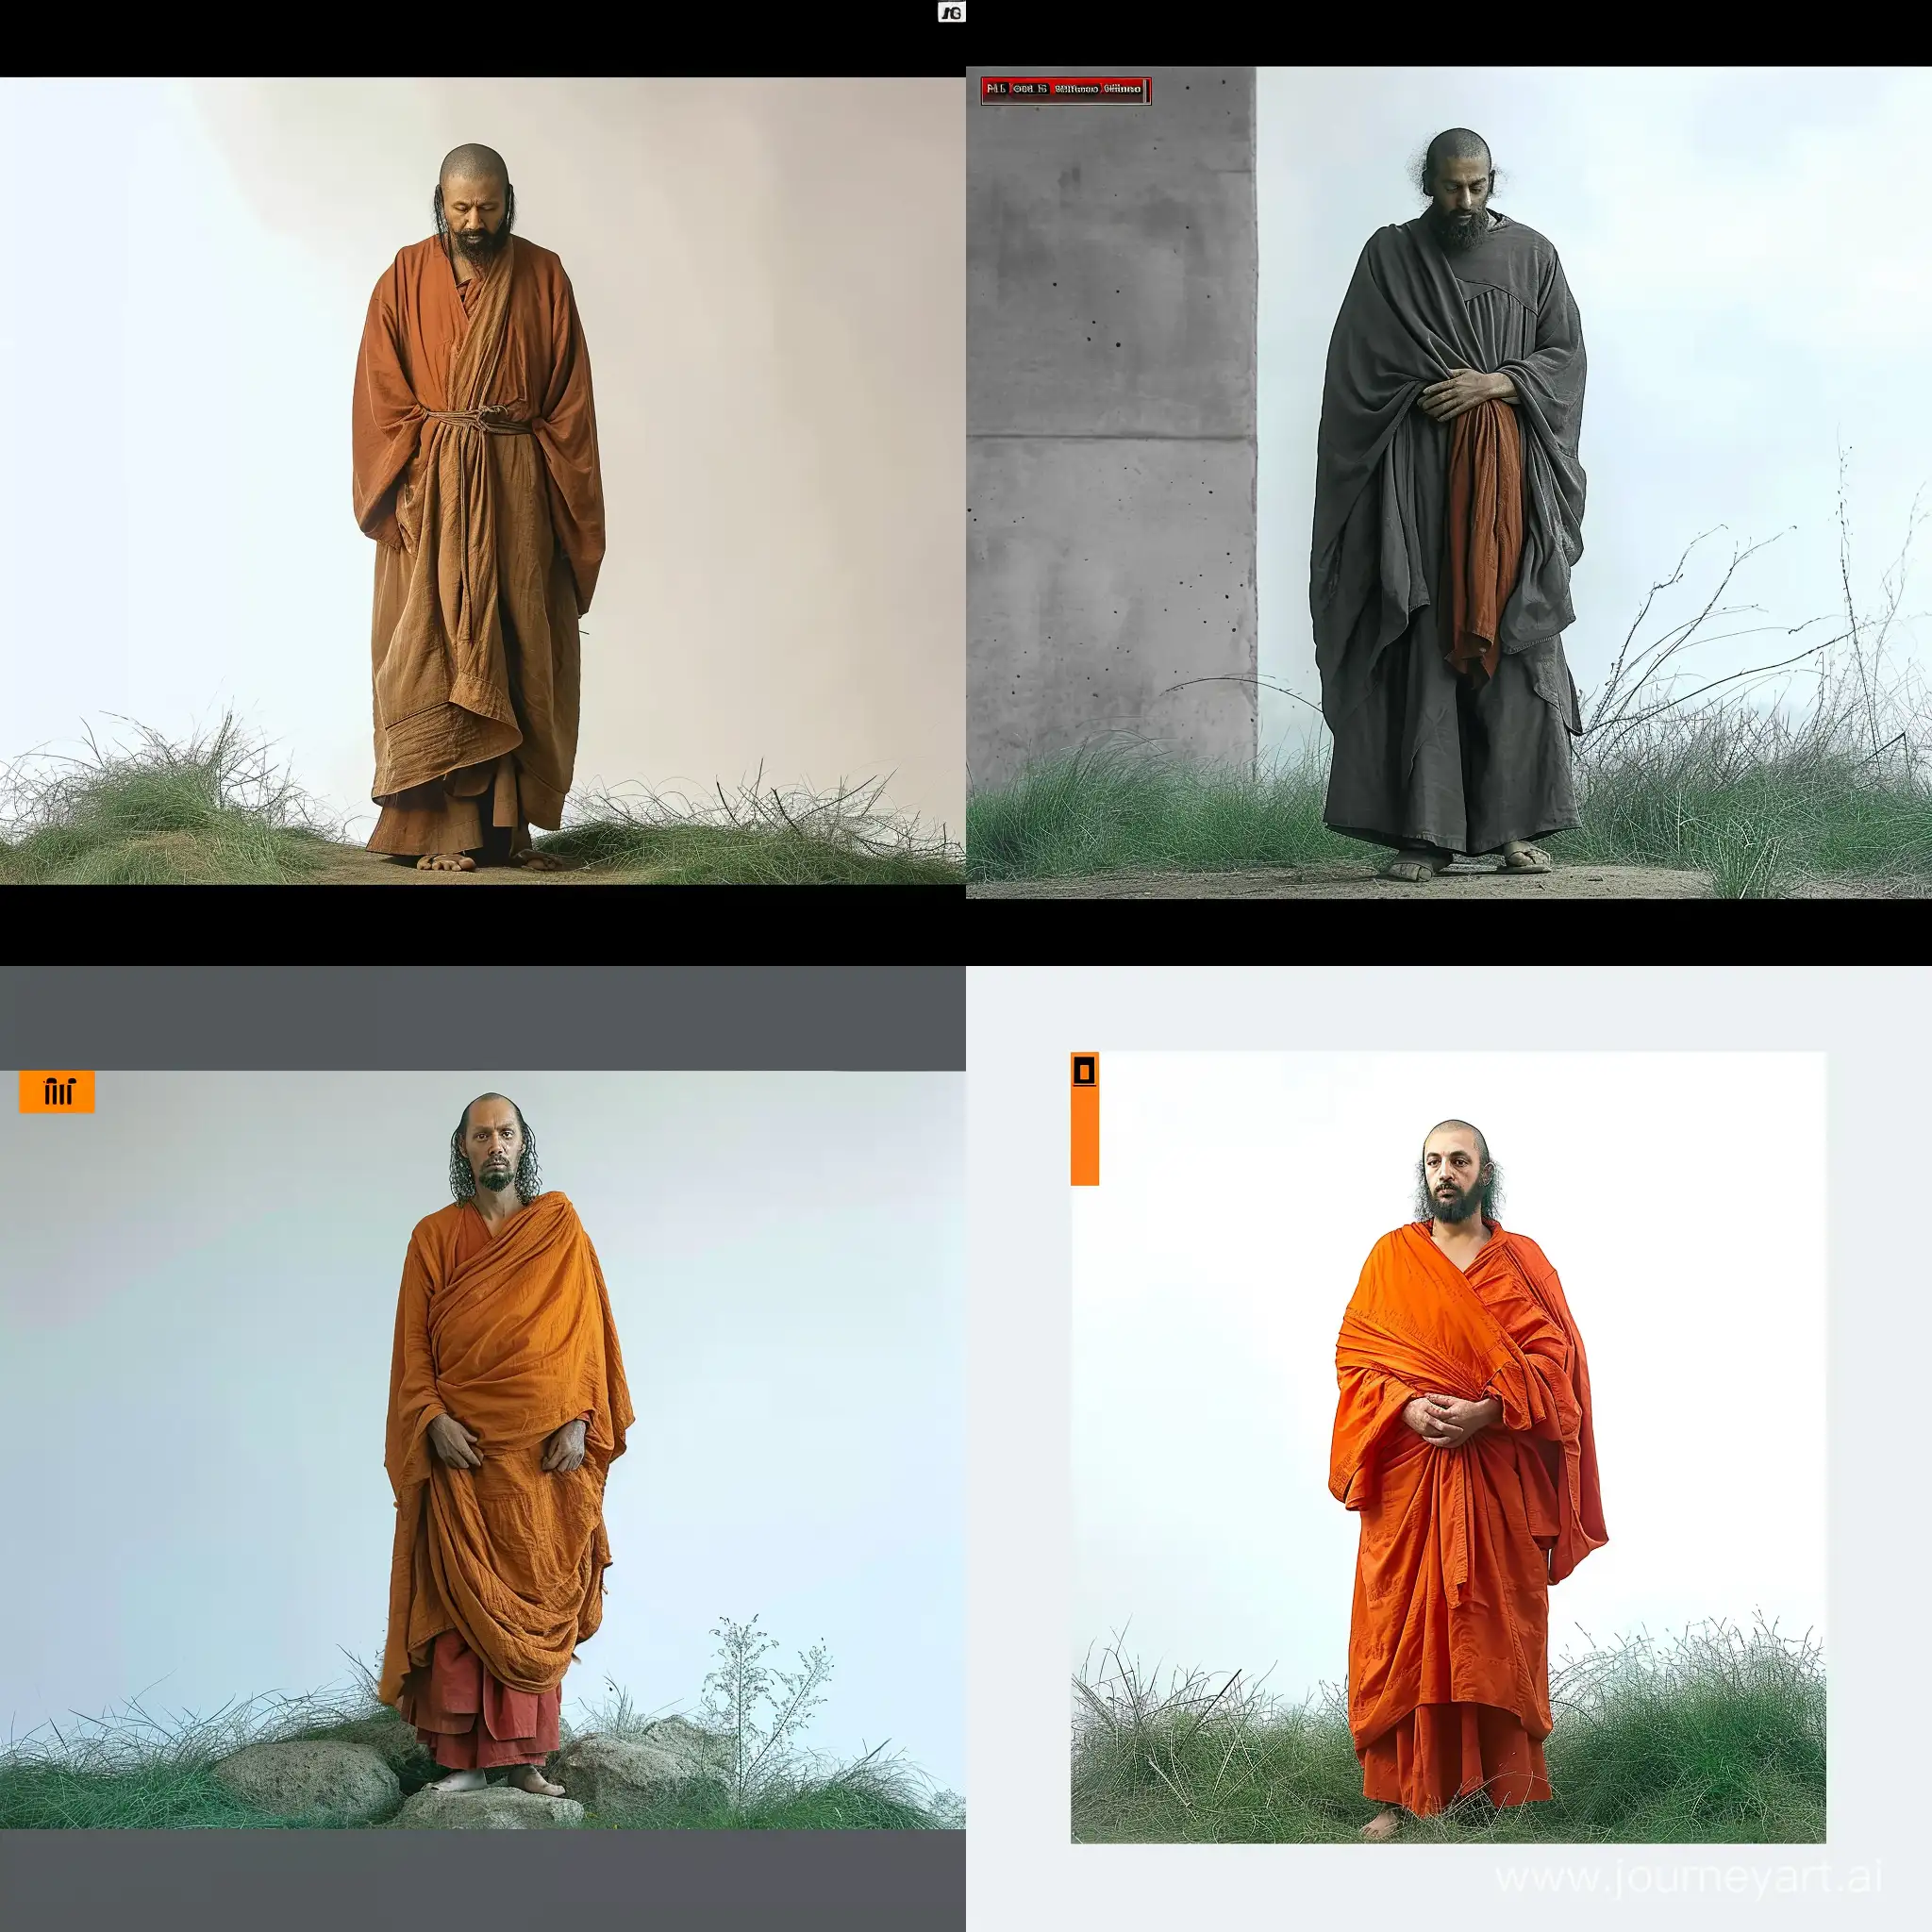 Serene-Monk-Standing-in-Contemplation